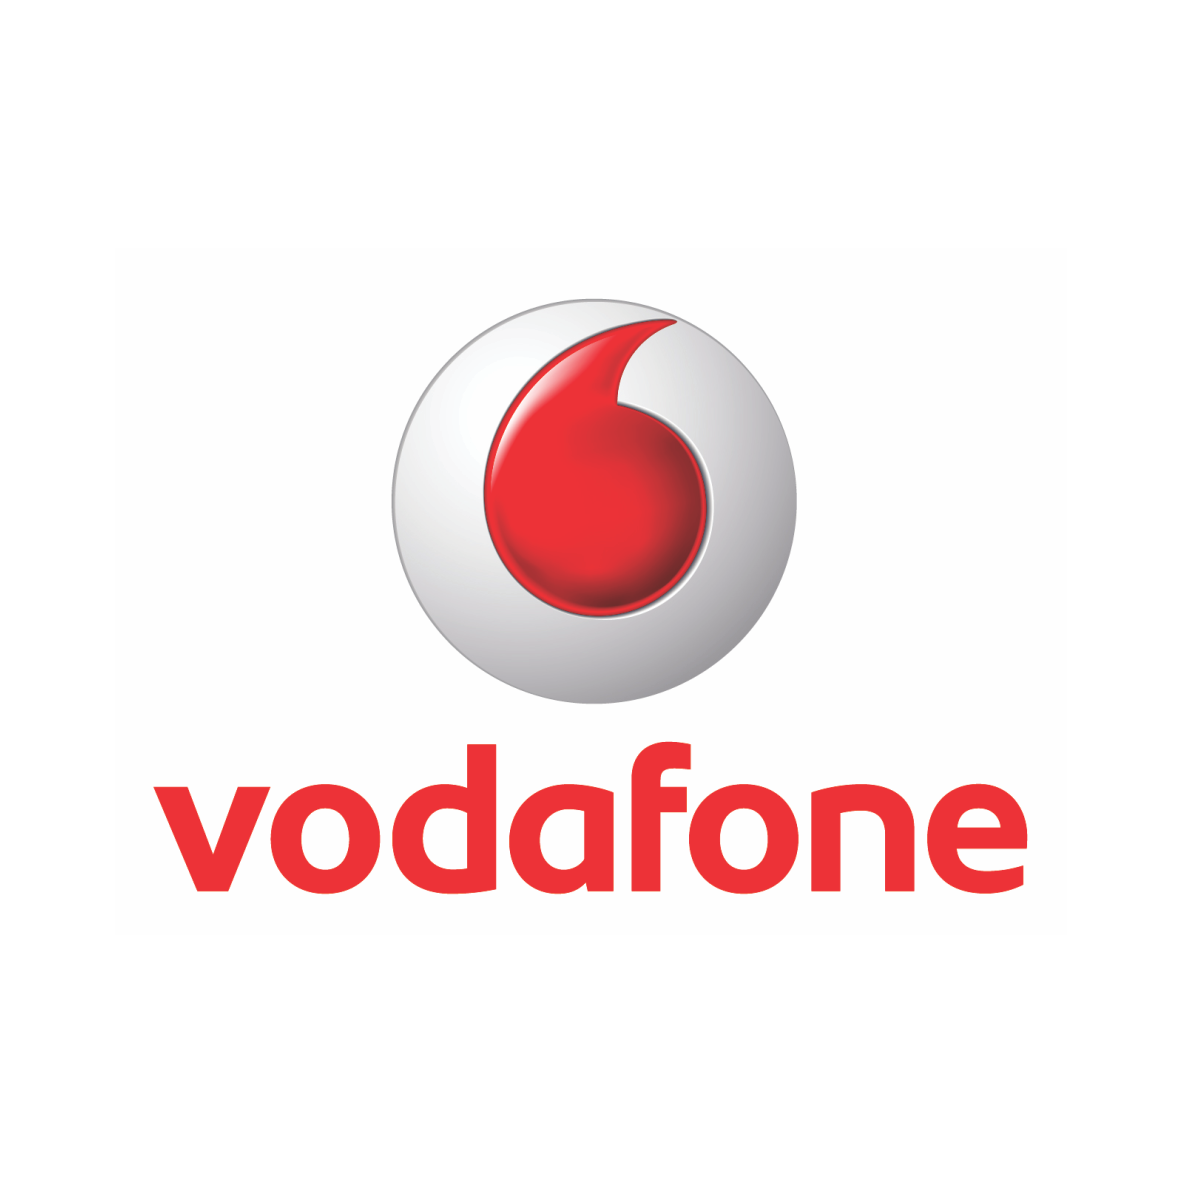 Logo of our client Vodaphone